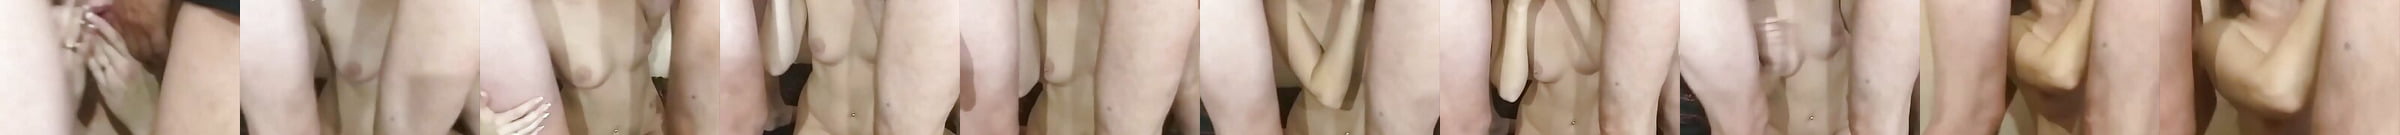 Marina Slutwife Free Shared Wife Facial HD Porn Video Fd XHamster